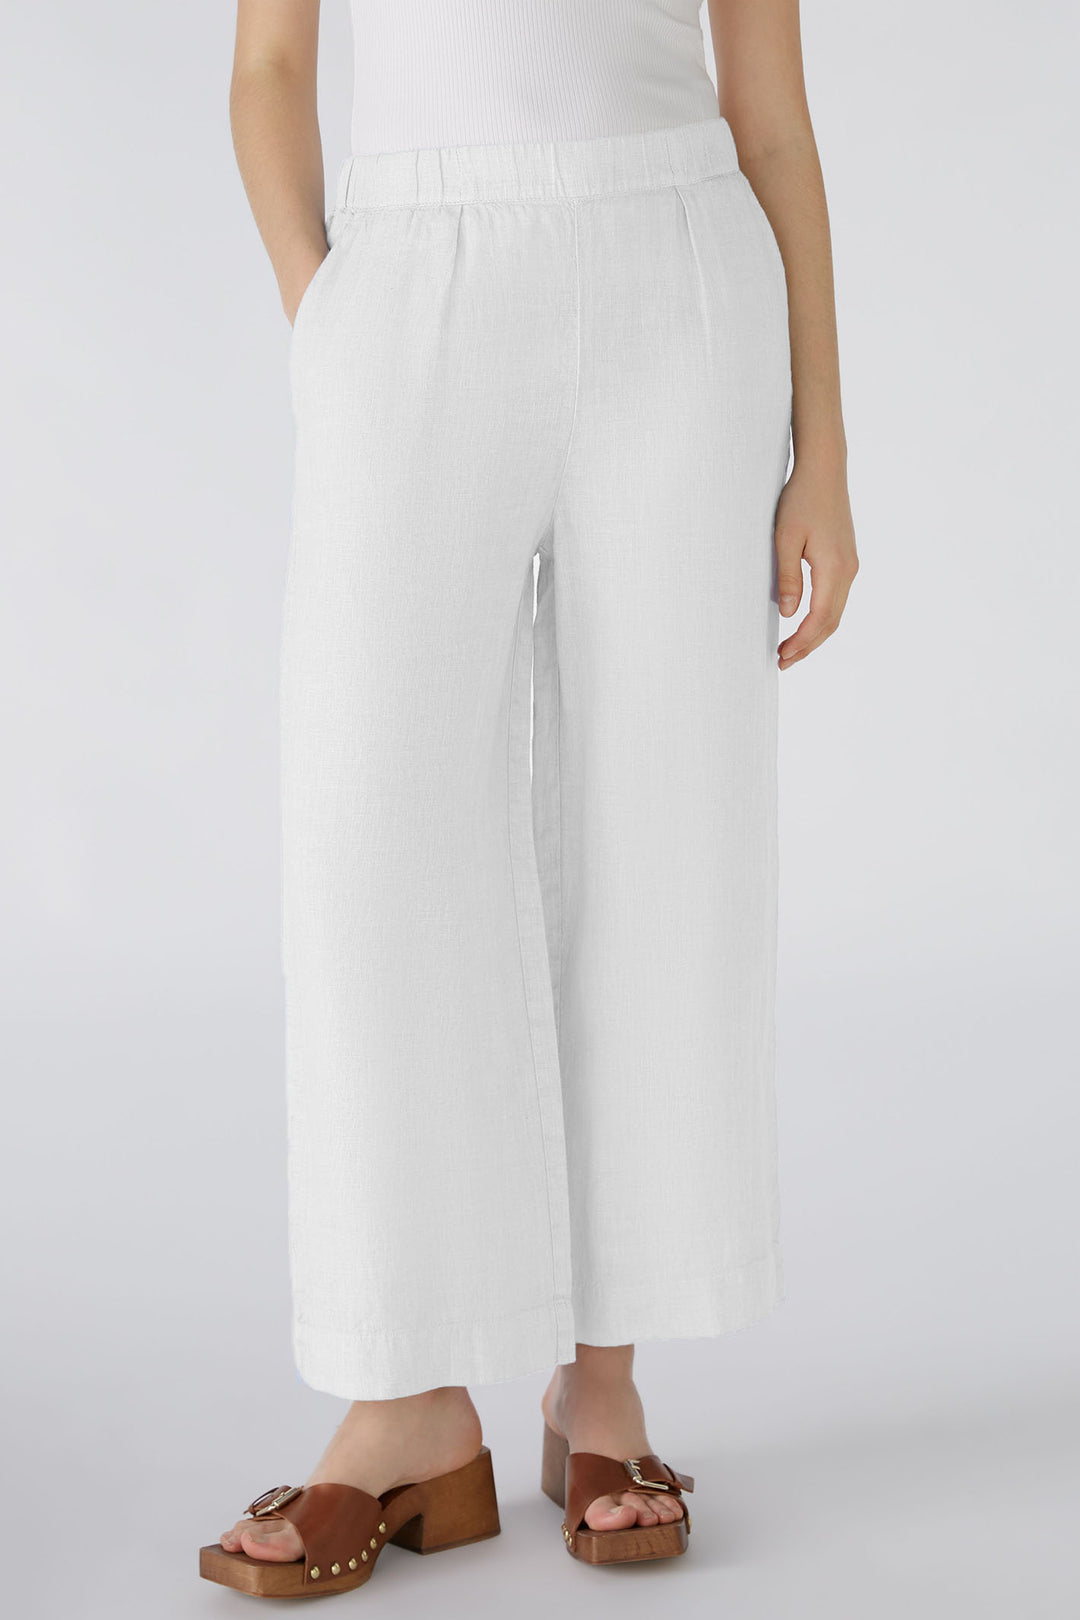 Oui 87581 Optic White Culotte Wide Leg Pull-On Trousers - Olivia Grace Fashion